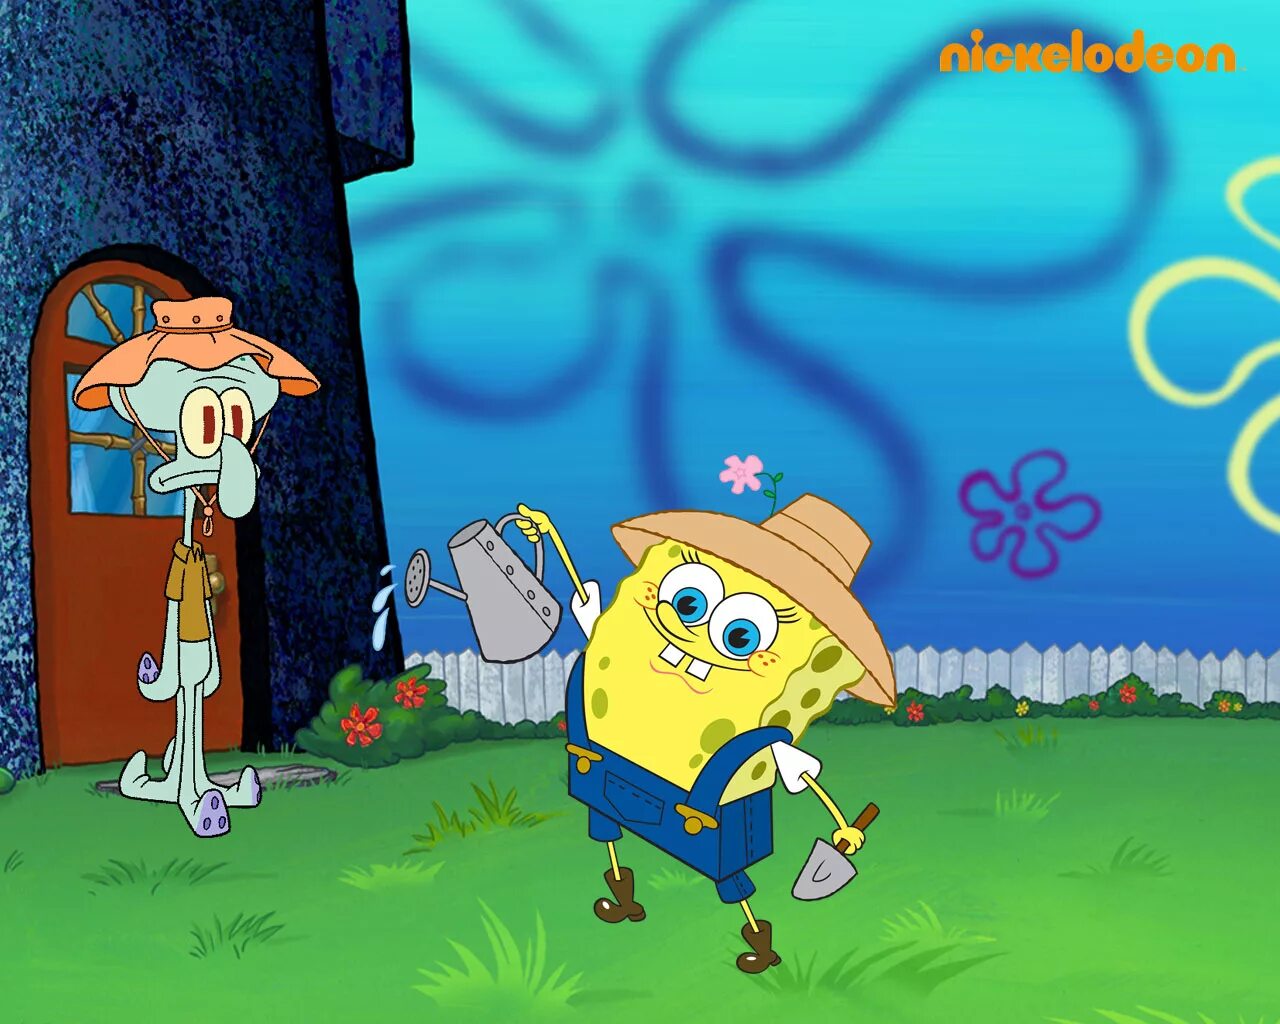 Spongebob squidward. Спанч Боб. Спанч Боб и Сквидвард. Губка Боб квадратные штаны Сквидвард. Губка Боб и его друзья.